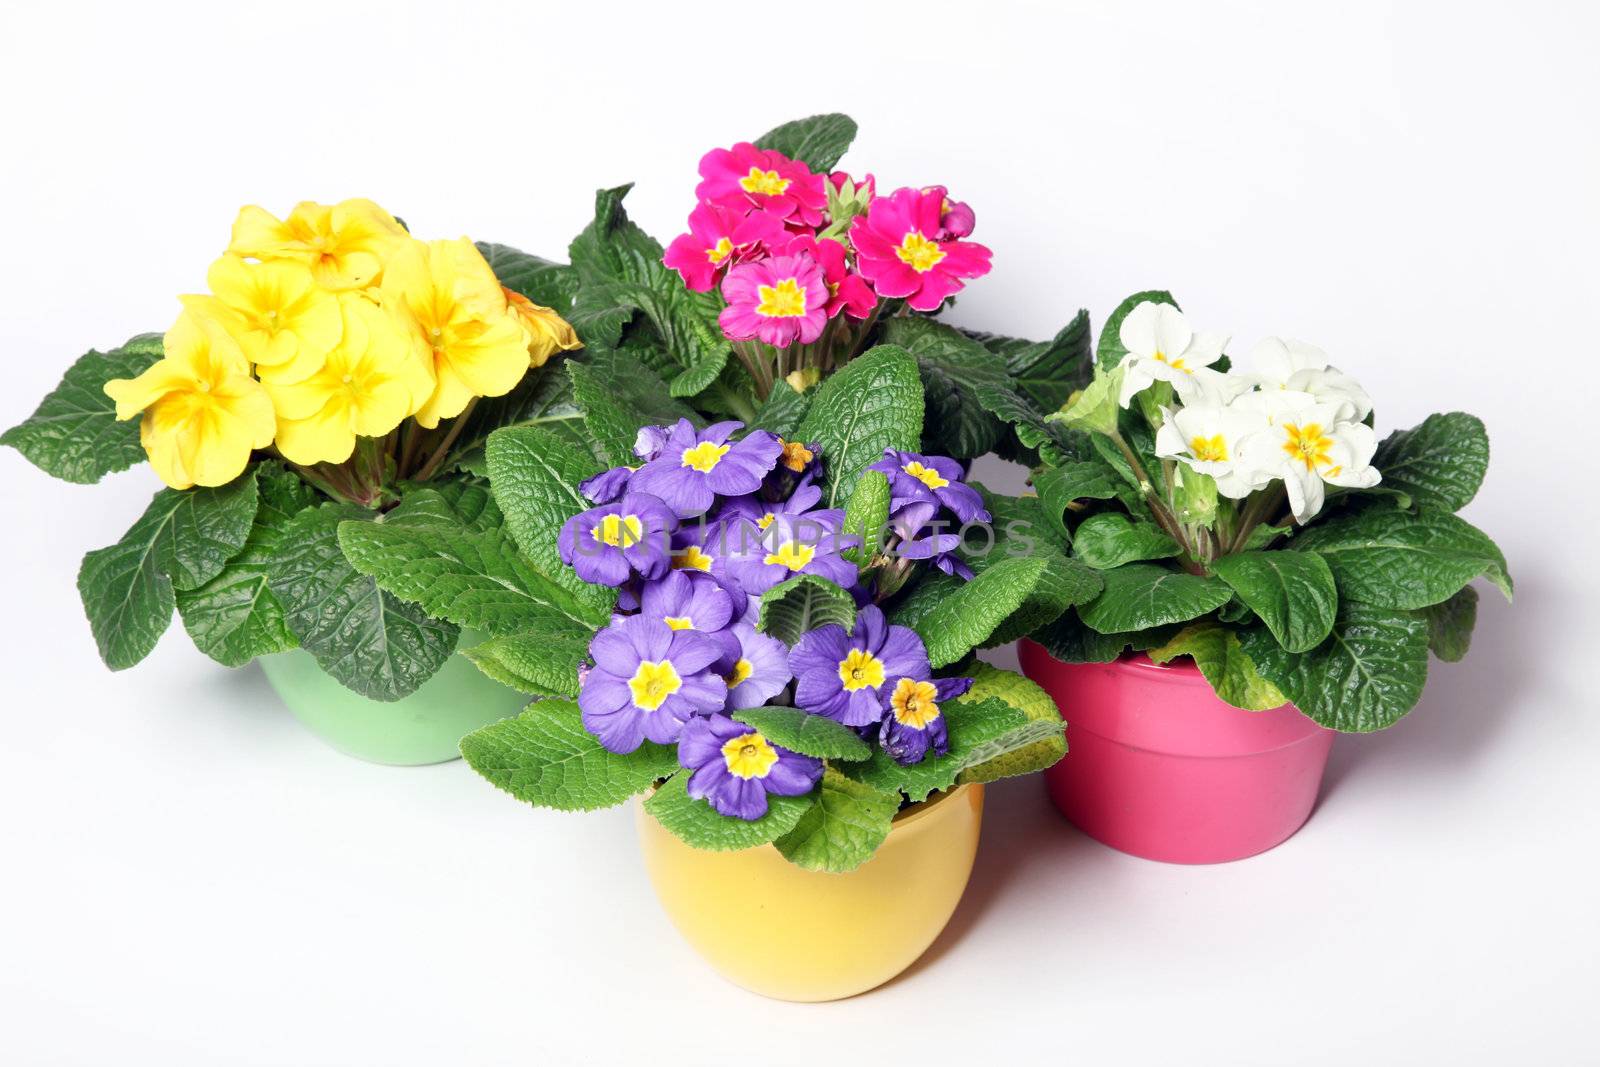 Primroses in colorful pots by Farina6000